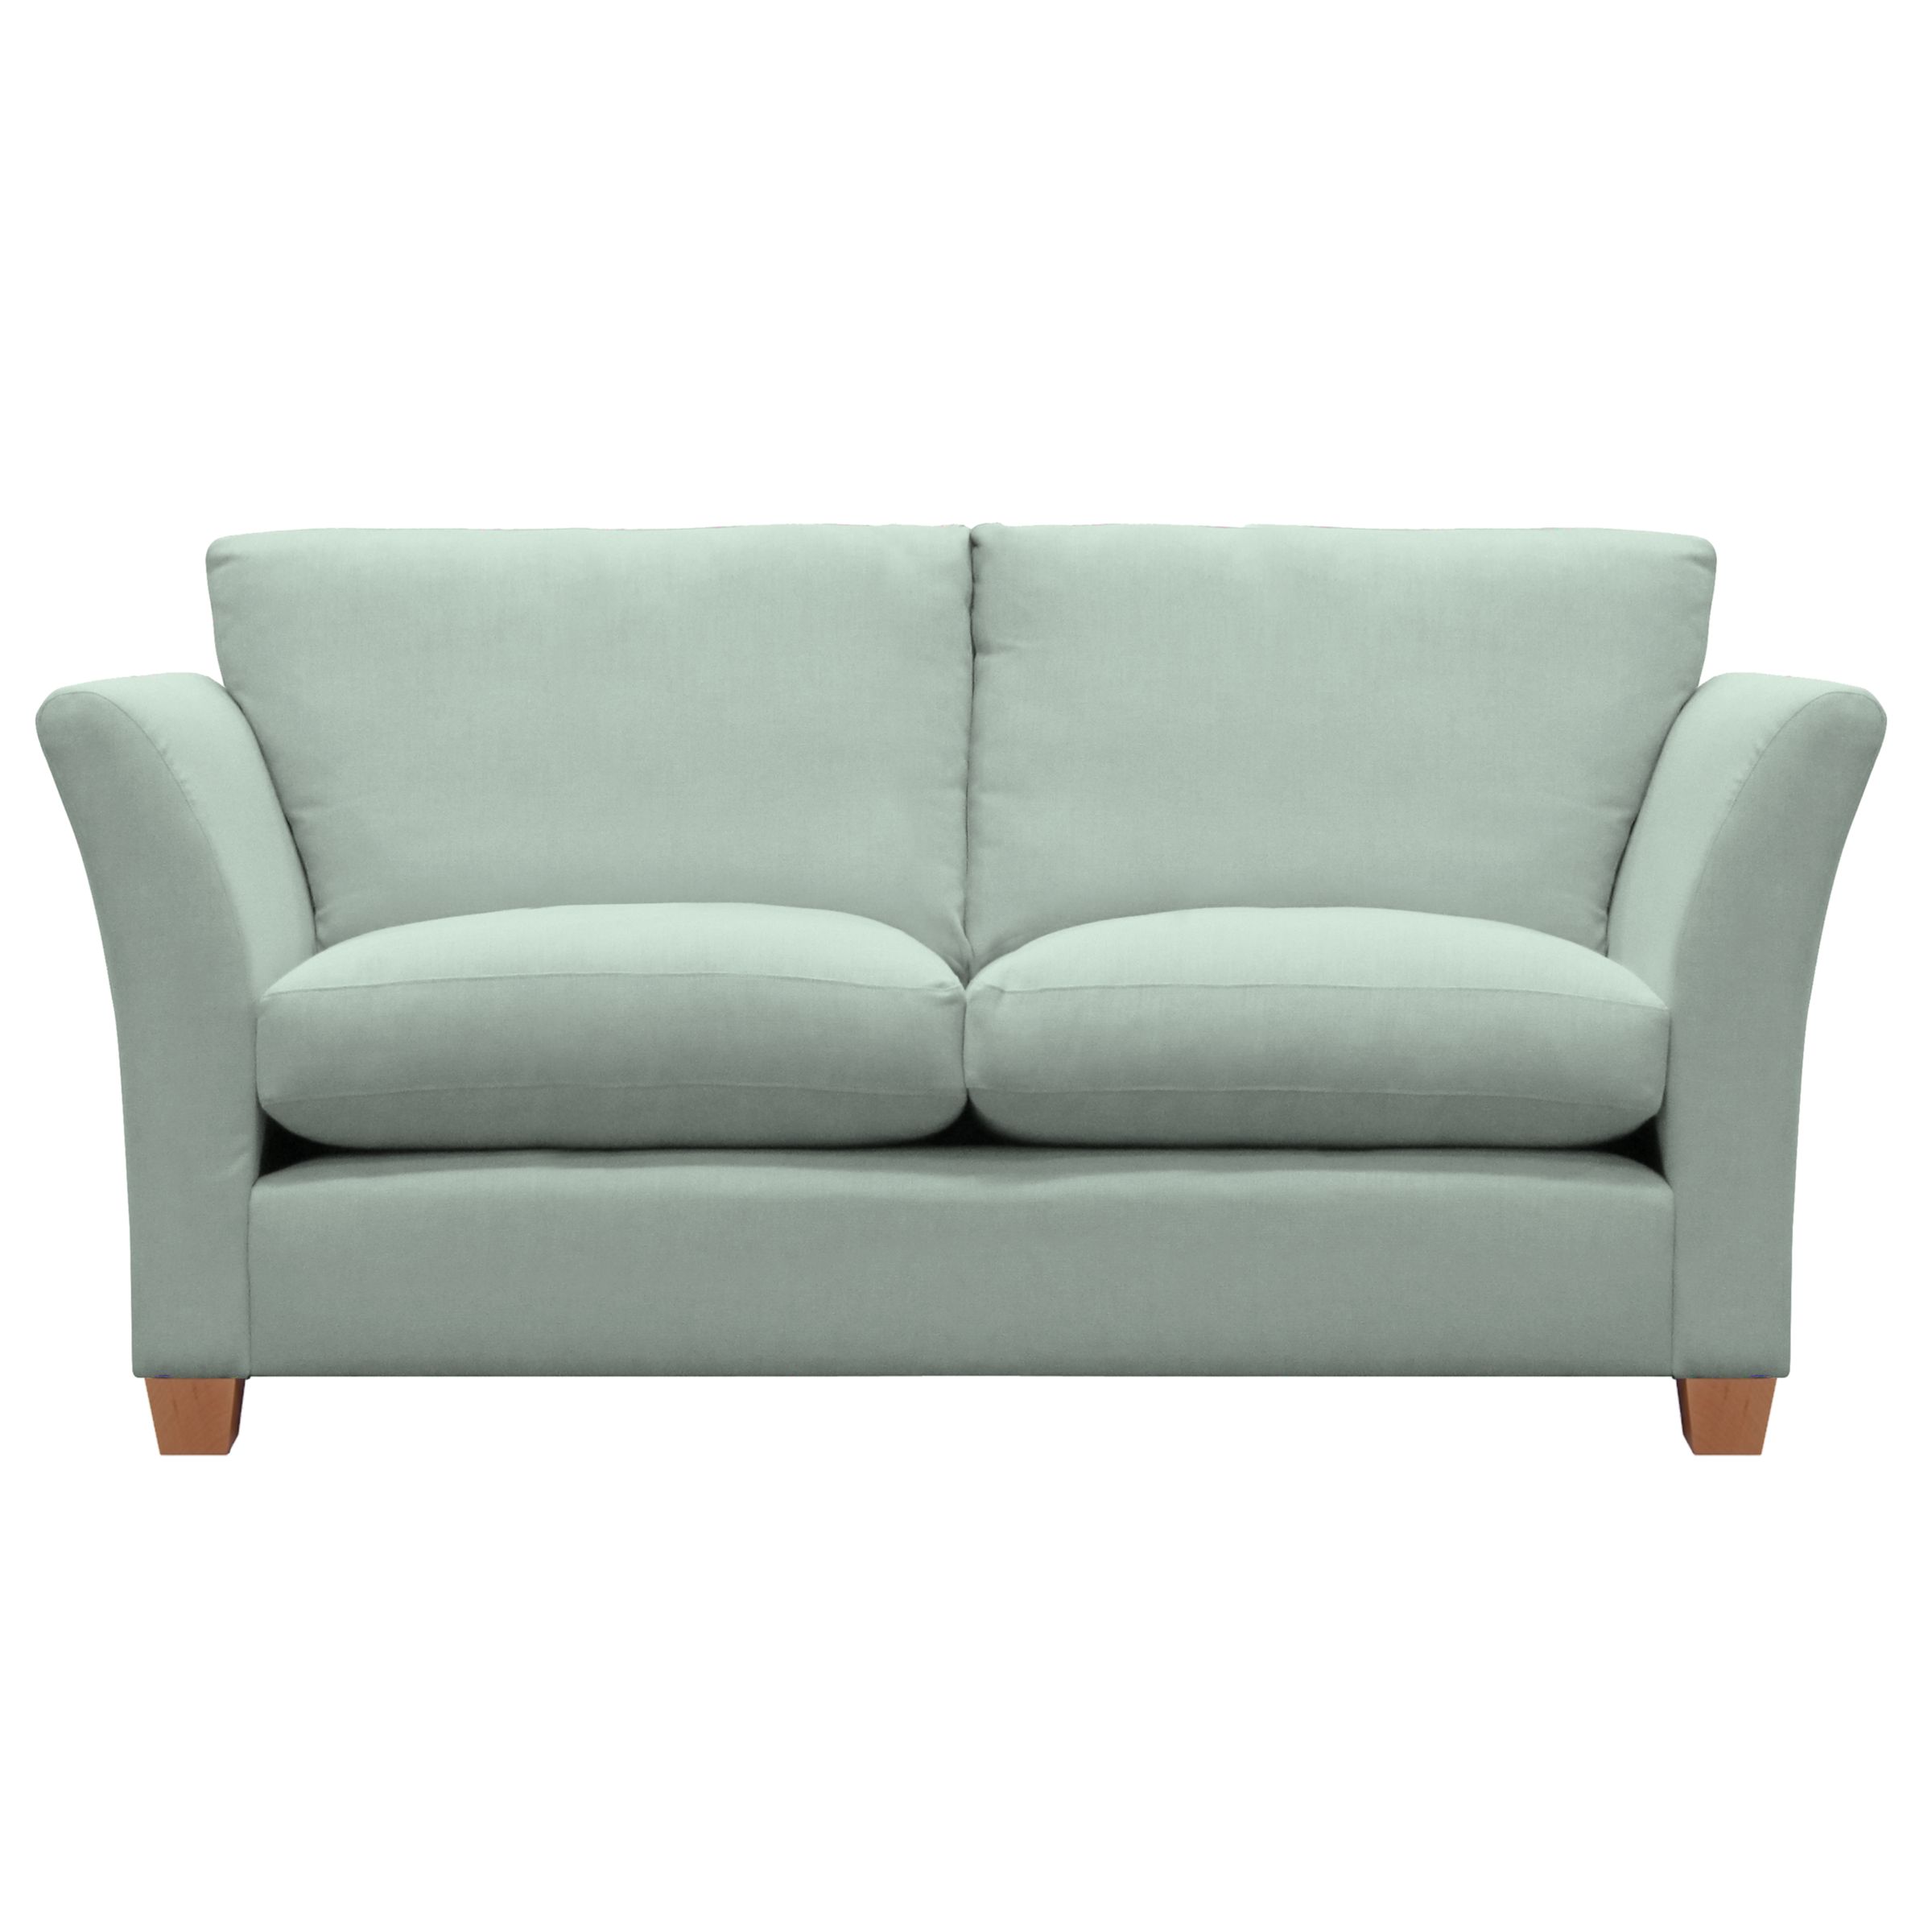 John Lewis Options Flare Arm Medium Sofa, Eaton Duck Egg, width 183cm